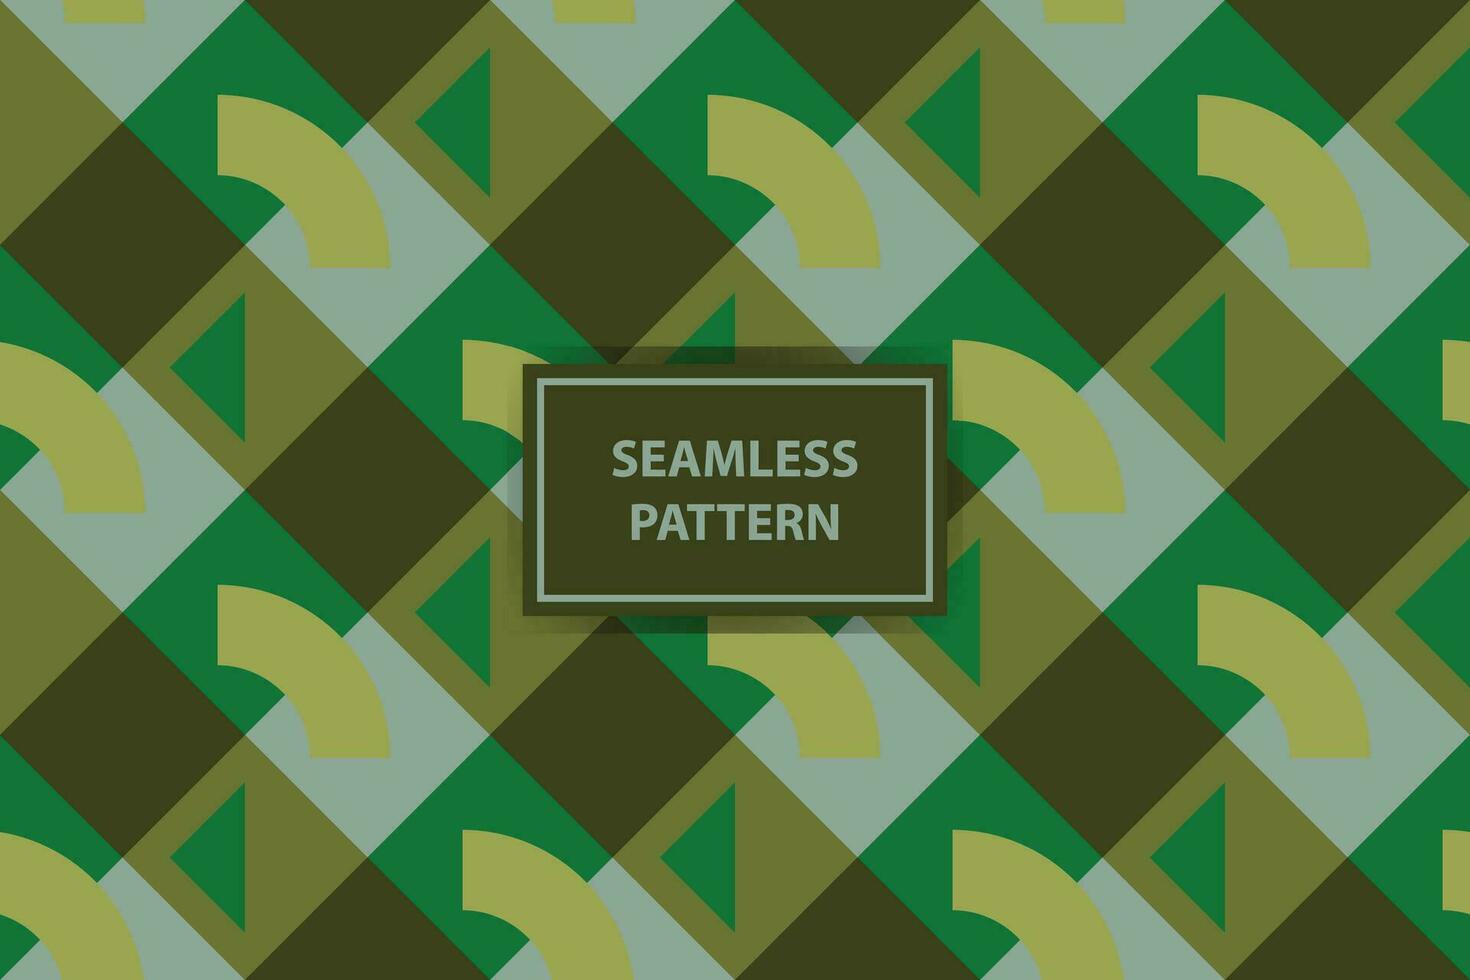 Green Seamless abstract geometric pattern. Vector Illustration.